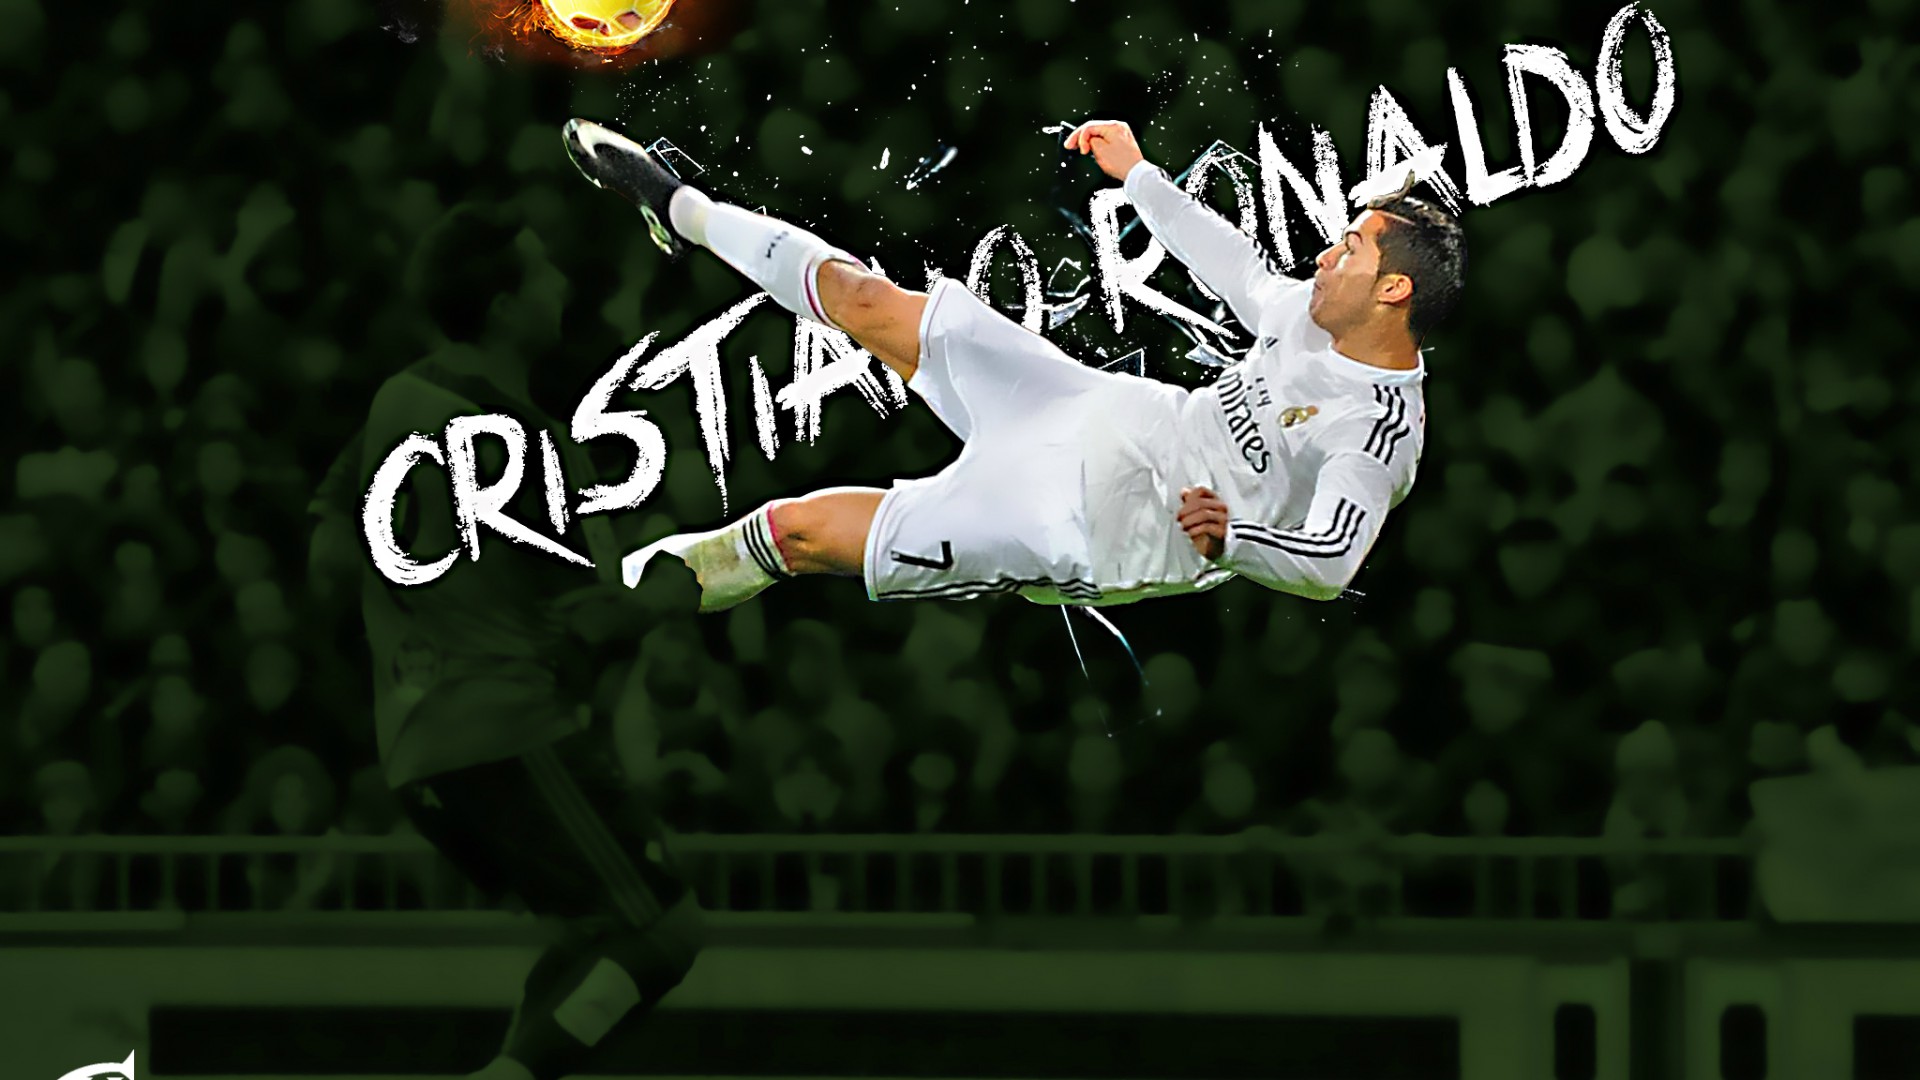 Ronaldo Cr7 Flying Shot Football HD Wallpaper Search More High